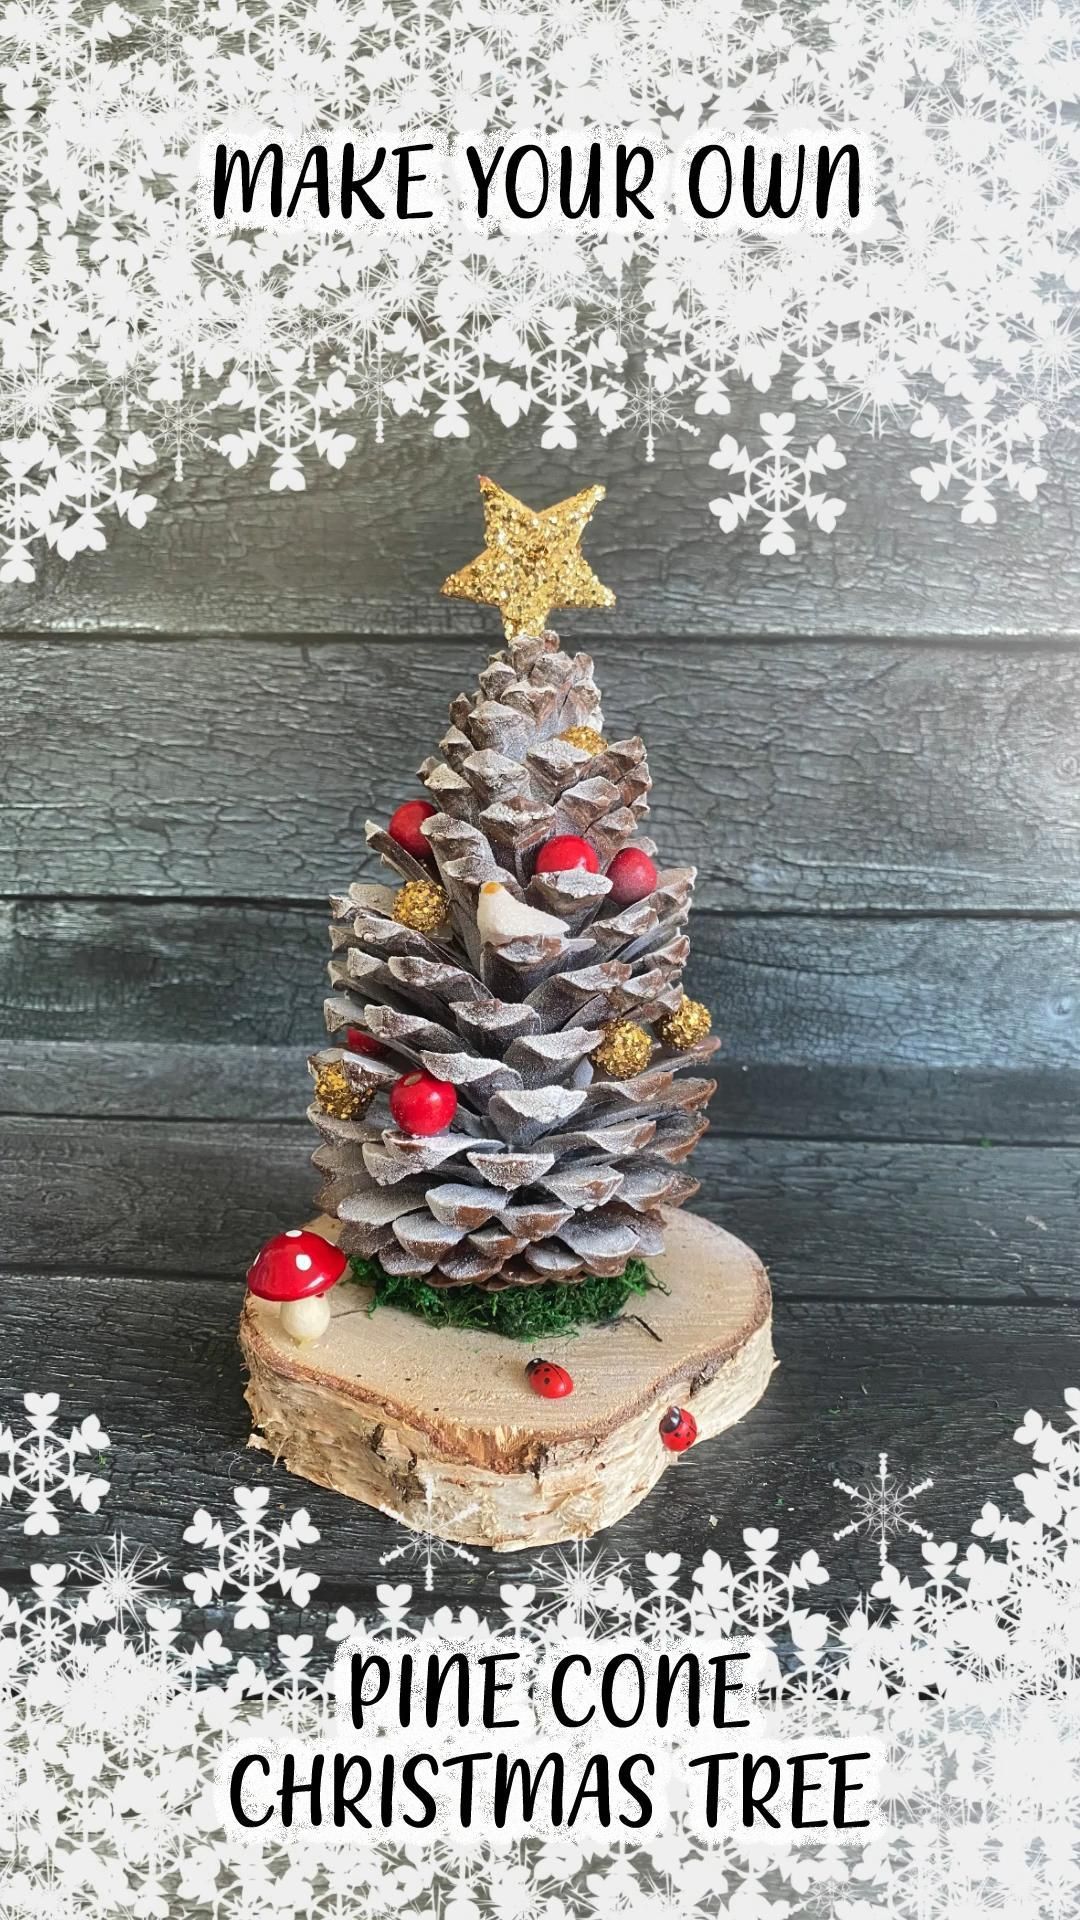 Giant Pine Cone Christmas Tree -   17 xmas crafts decorations ideas